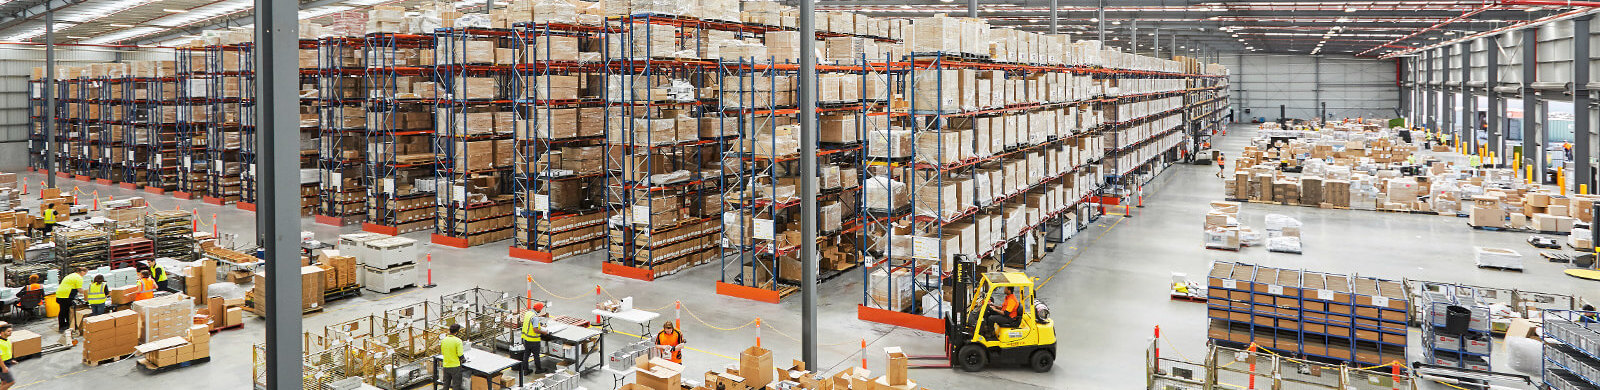 international distribution 3pl warehouse